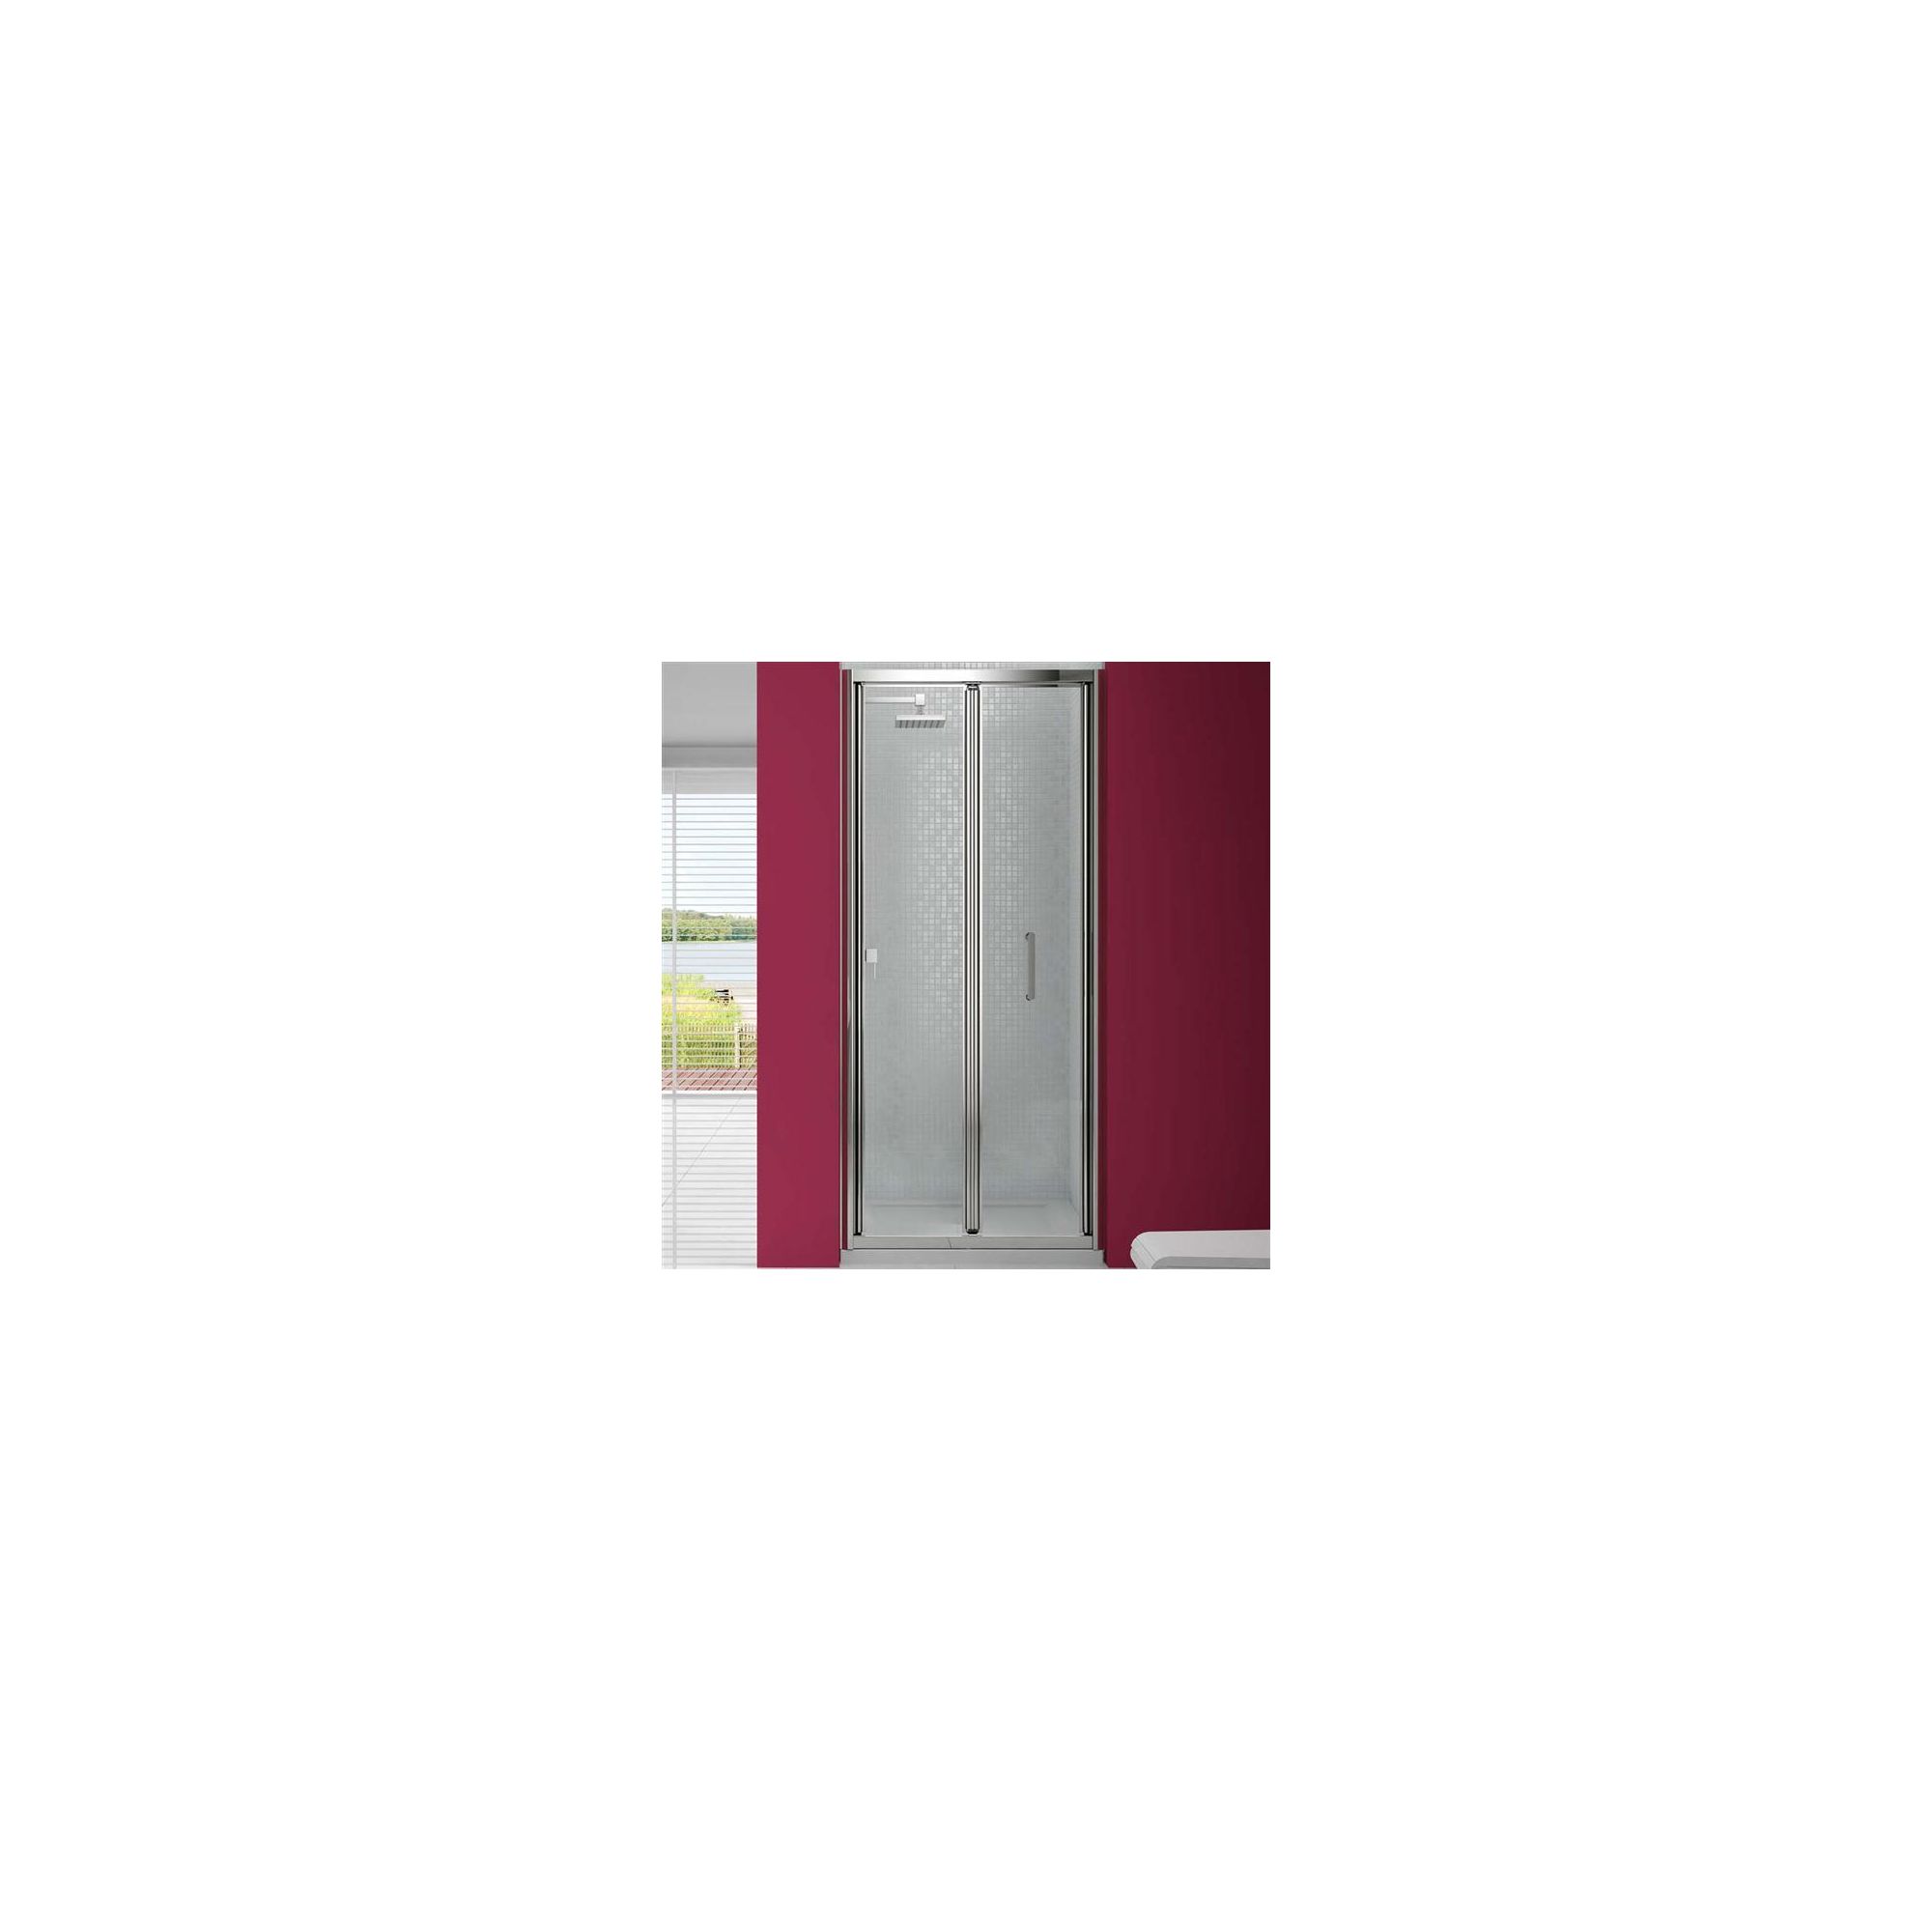 Merlyn Vivid Six Bi-Fold Shower Door, 900mm x 900mm, 6mm Glass at Tesco Direct